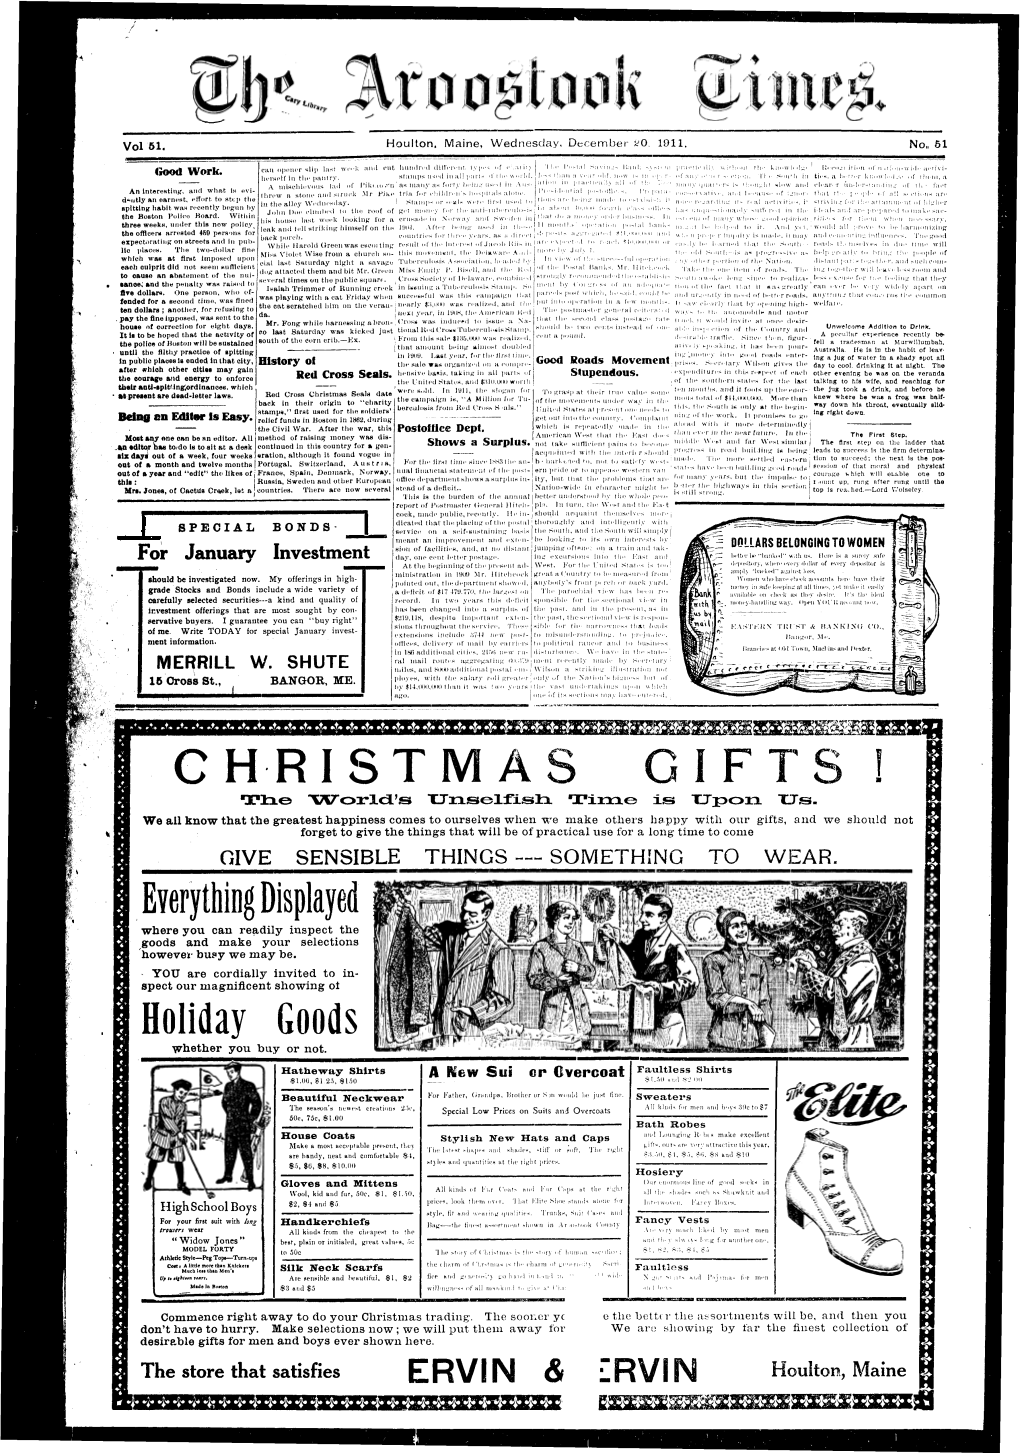 The Aroostook Times, December 20, 1911